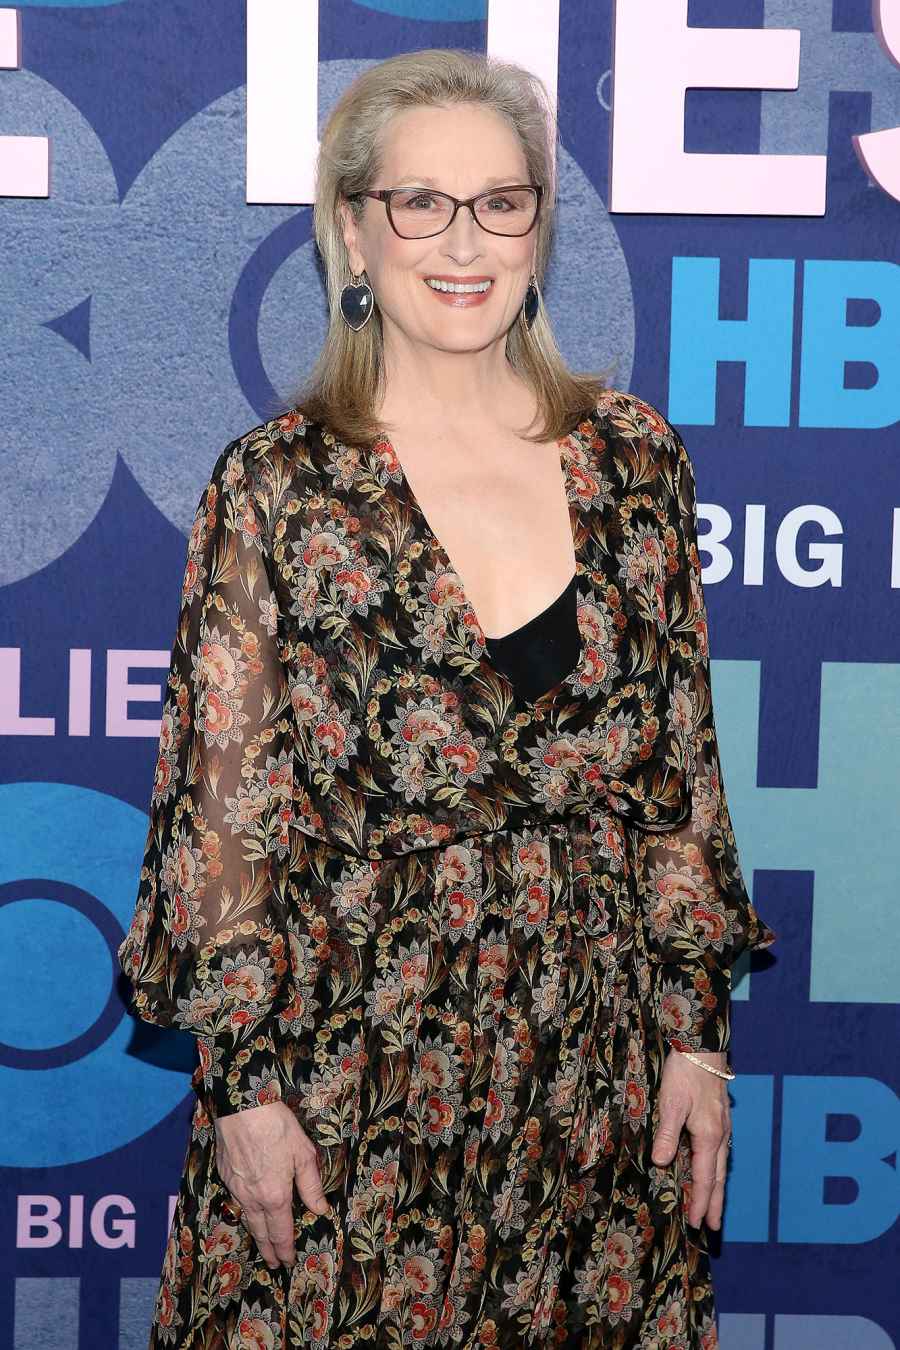 Meryl Streep Wearing Glasses and Heart Shaped Earrings Flower Dress